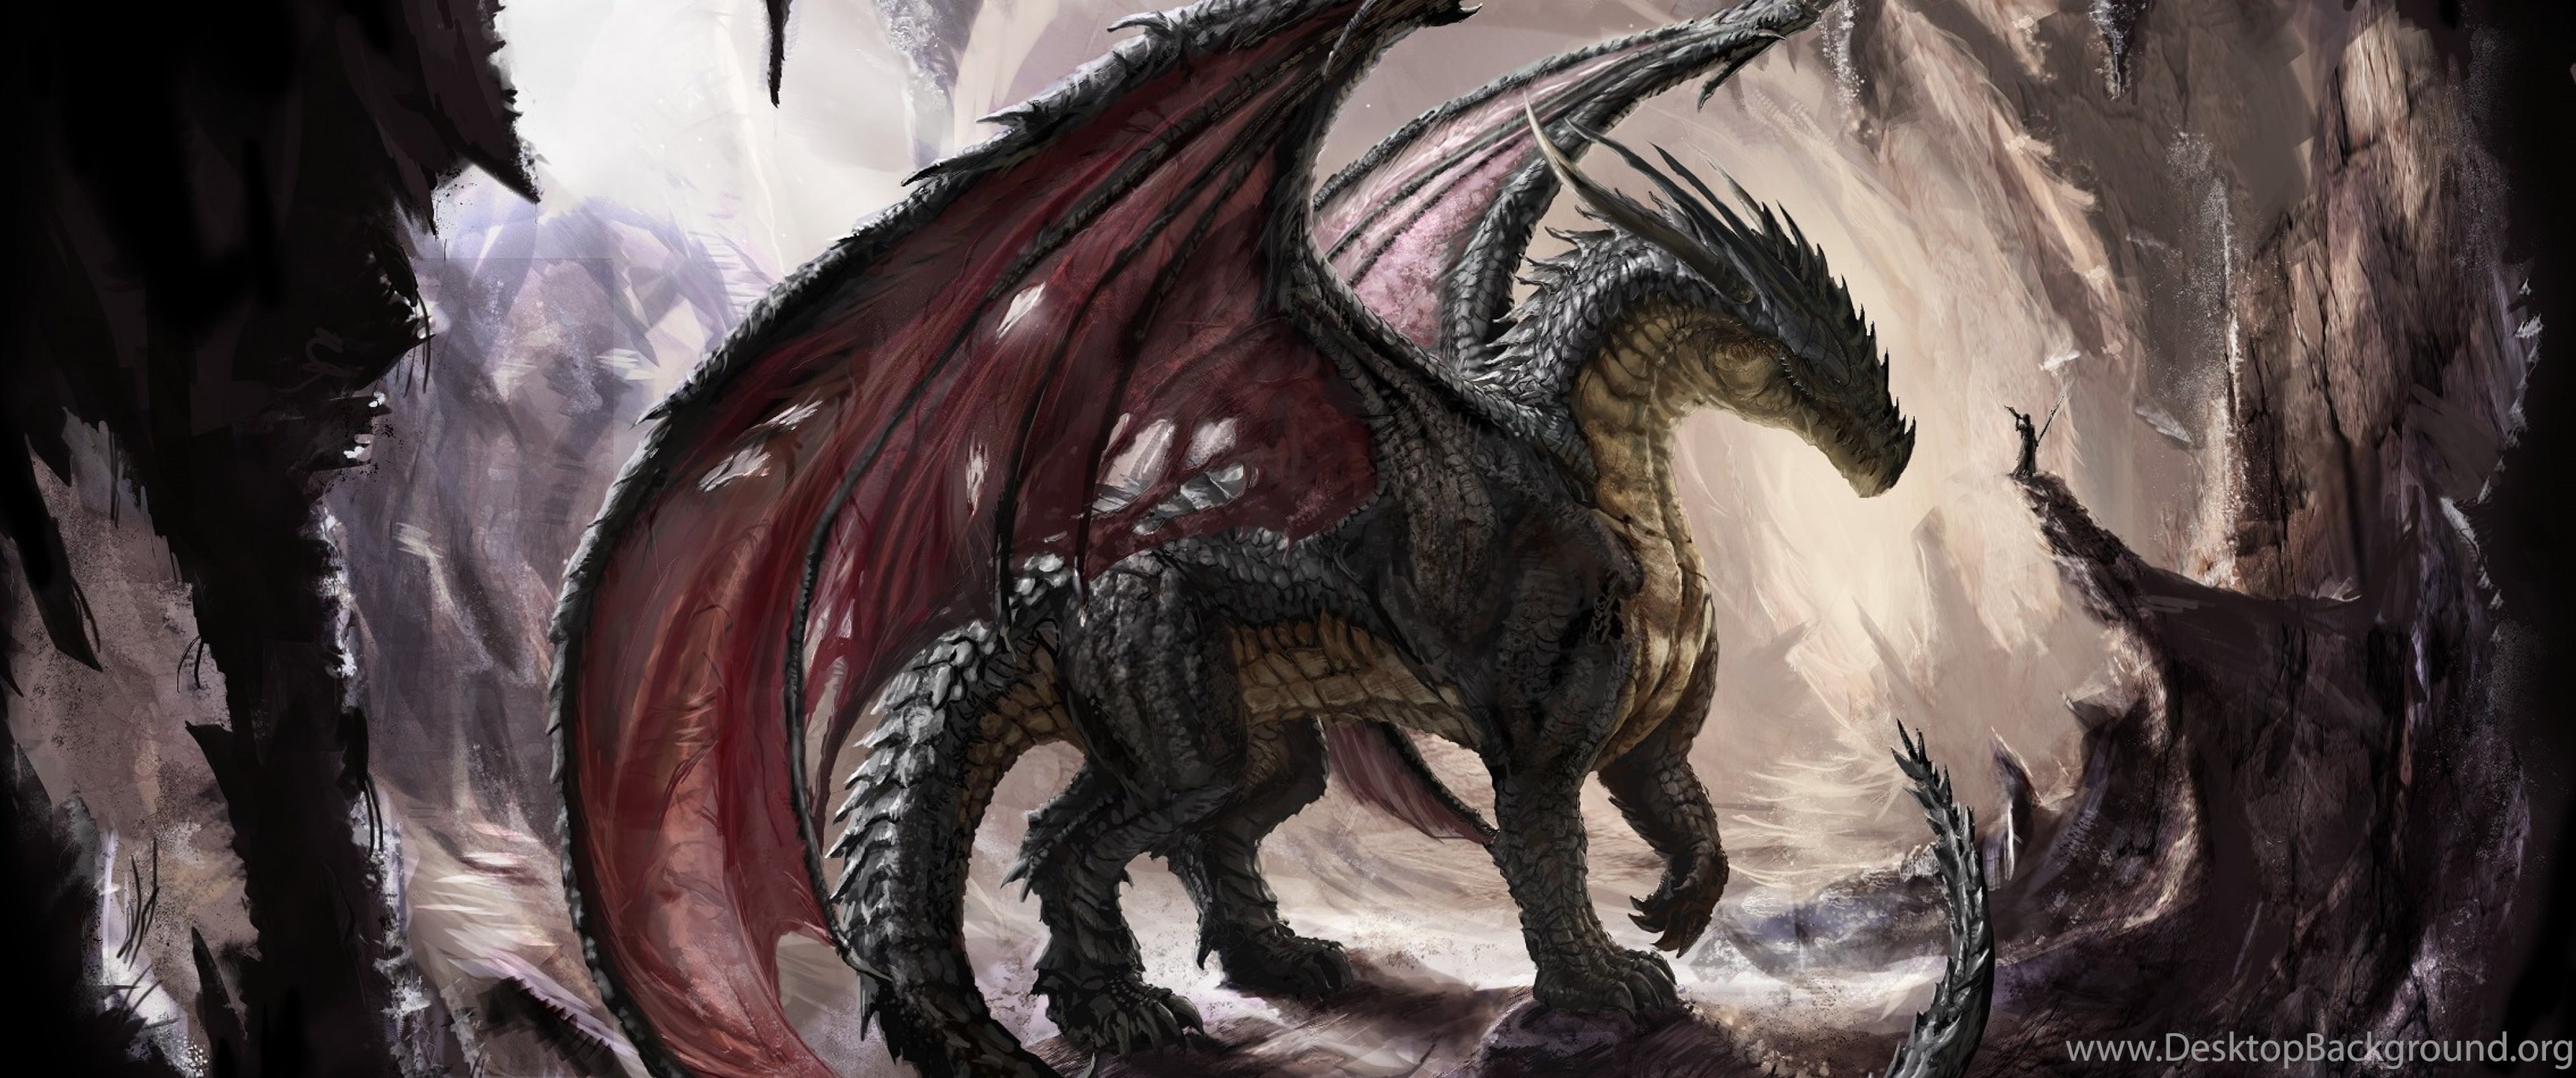 dragones wallpaper hd,drachen,erfundener charakter,mythische kreatur,cg kunstwerk,mythologie